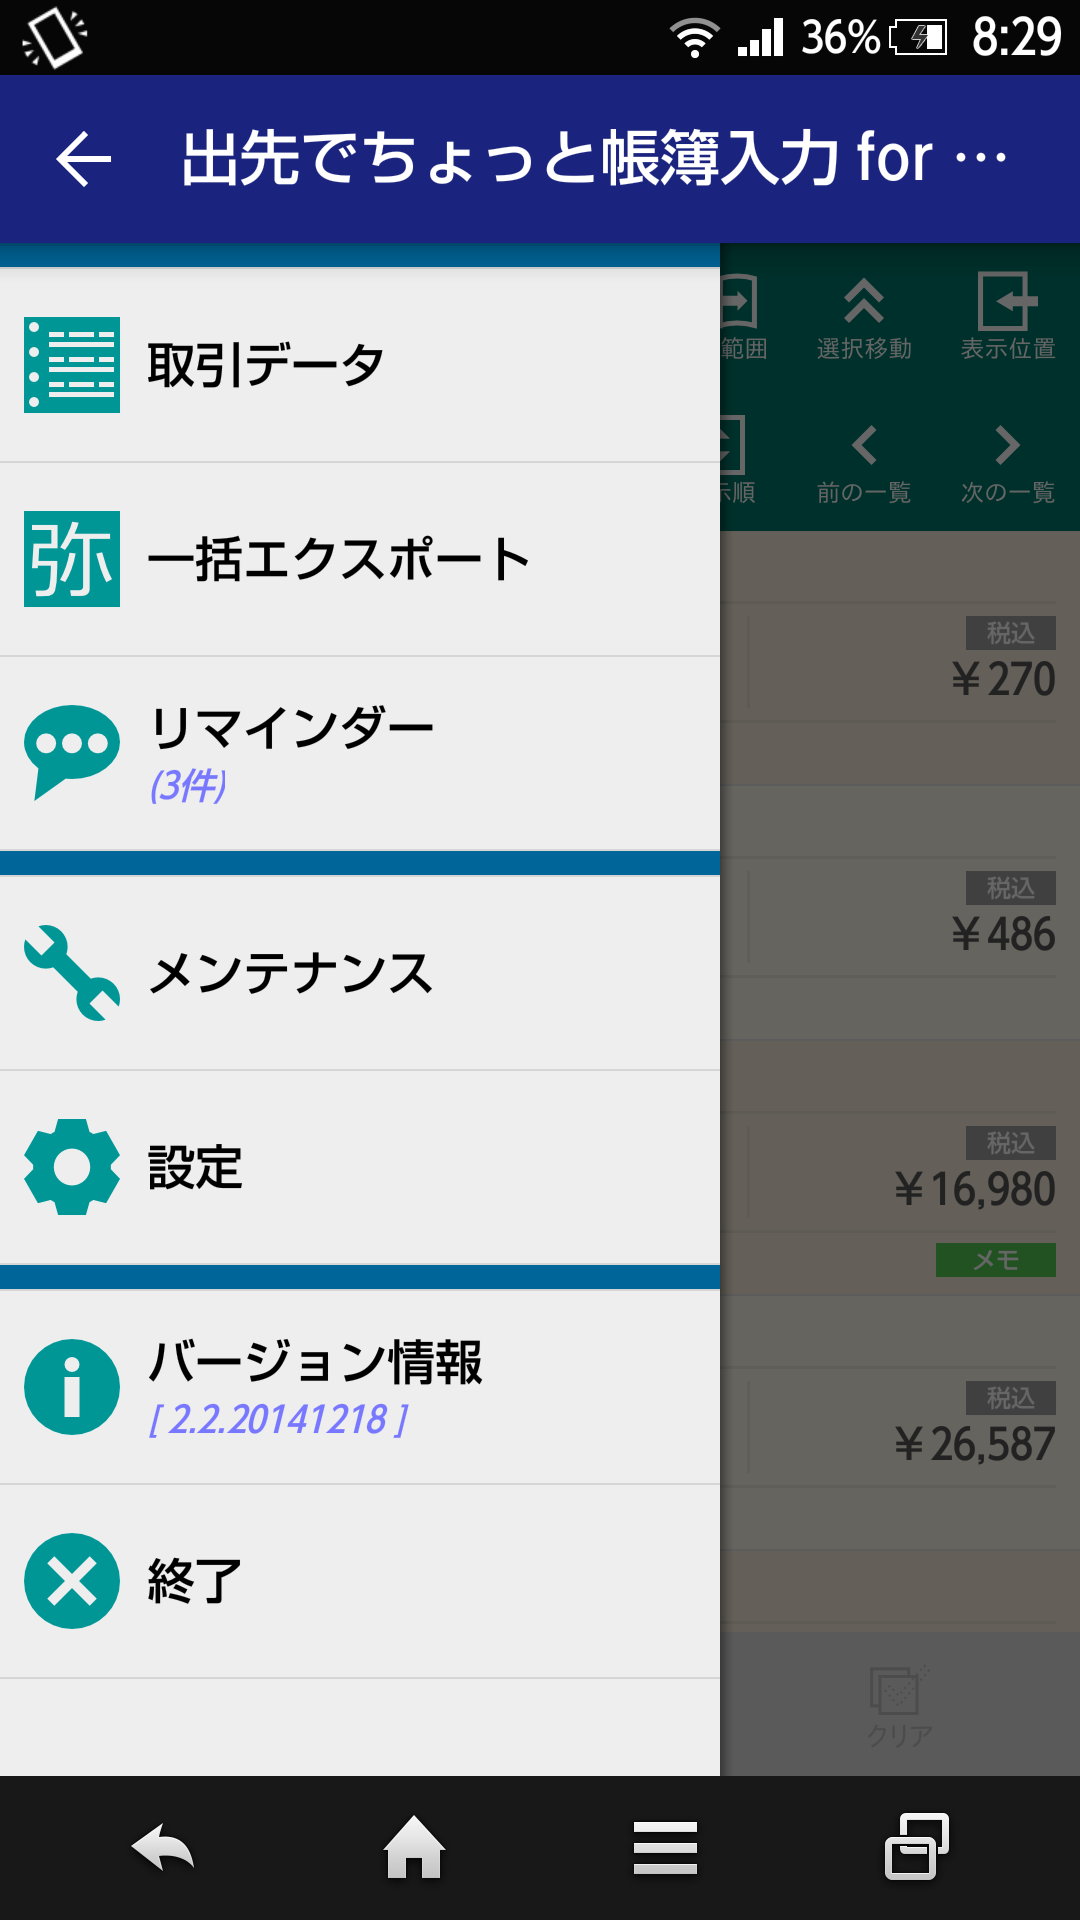 Android application 出先でちょっと帳簿入力 for 弥生会計 アドバンス screenshort